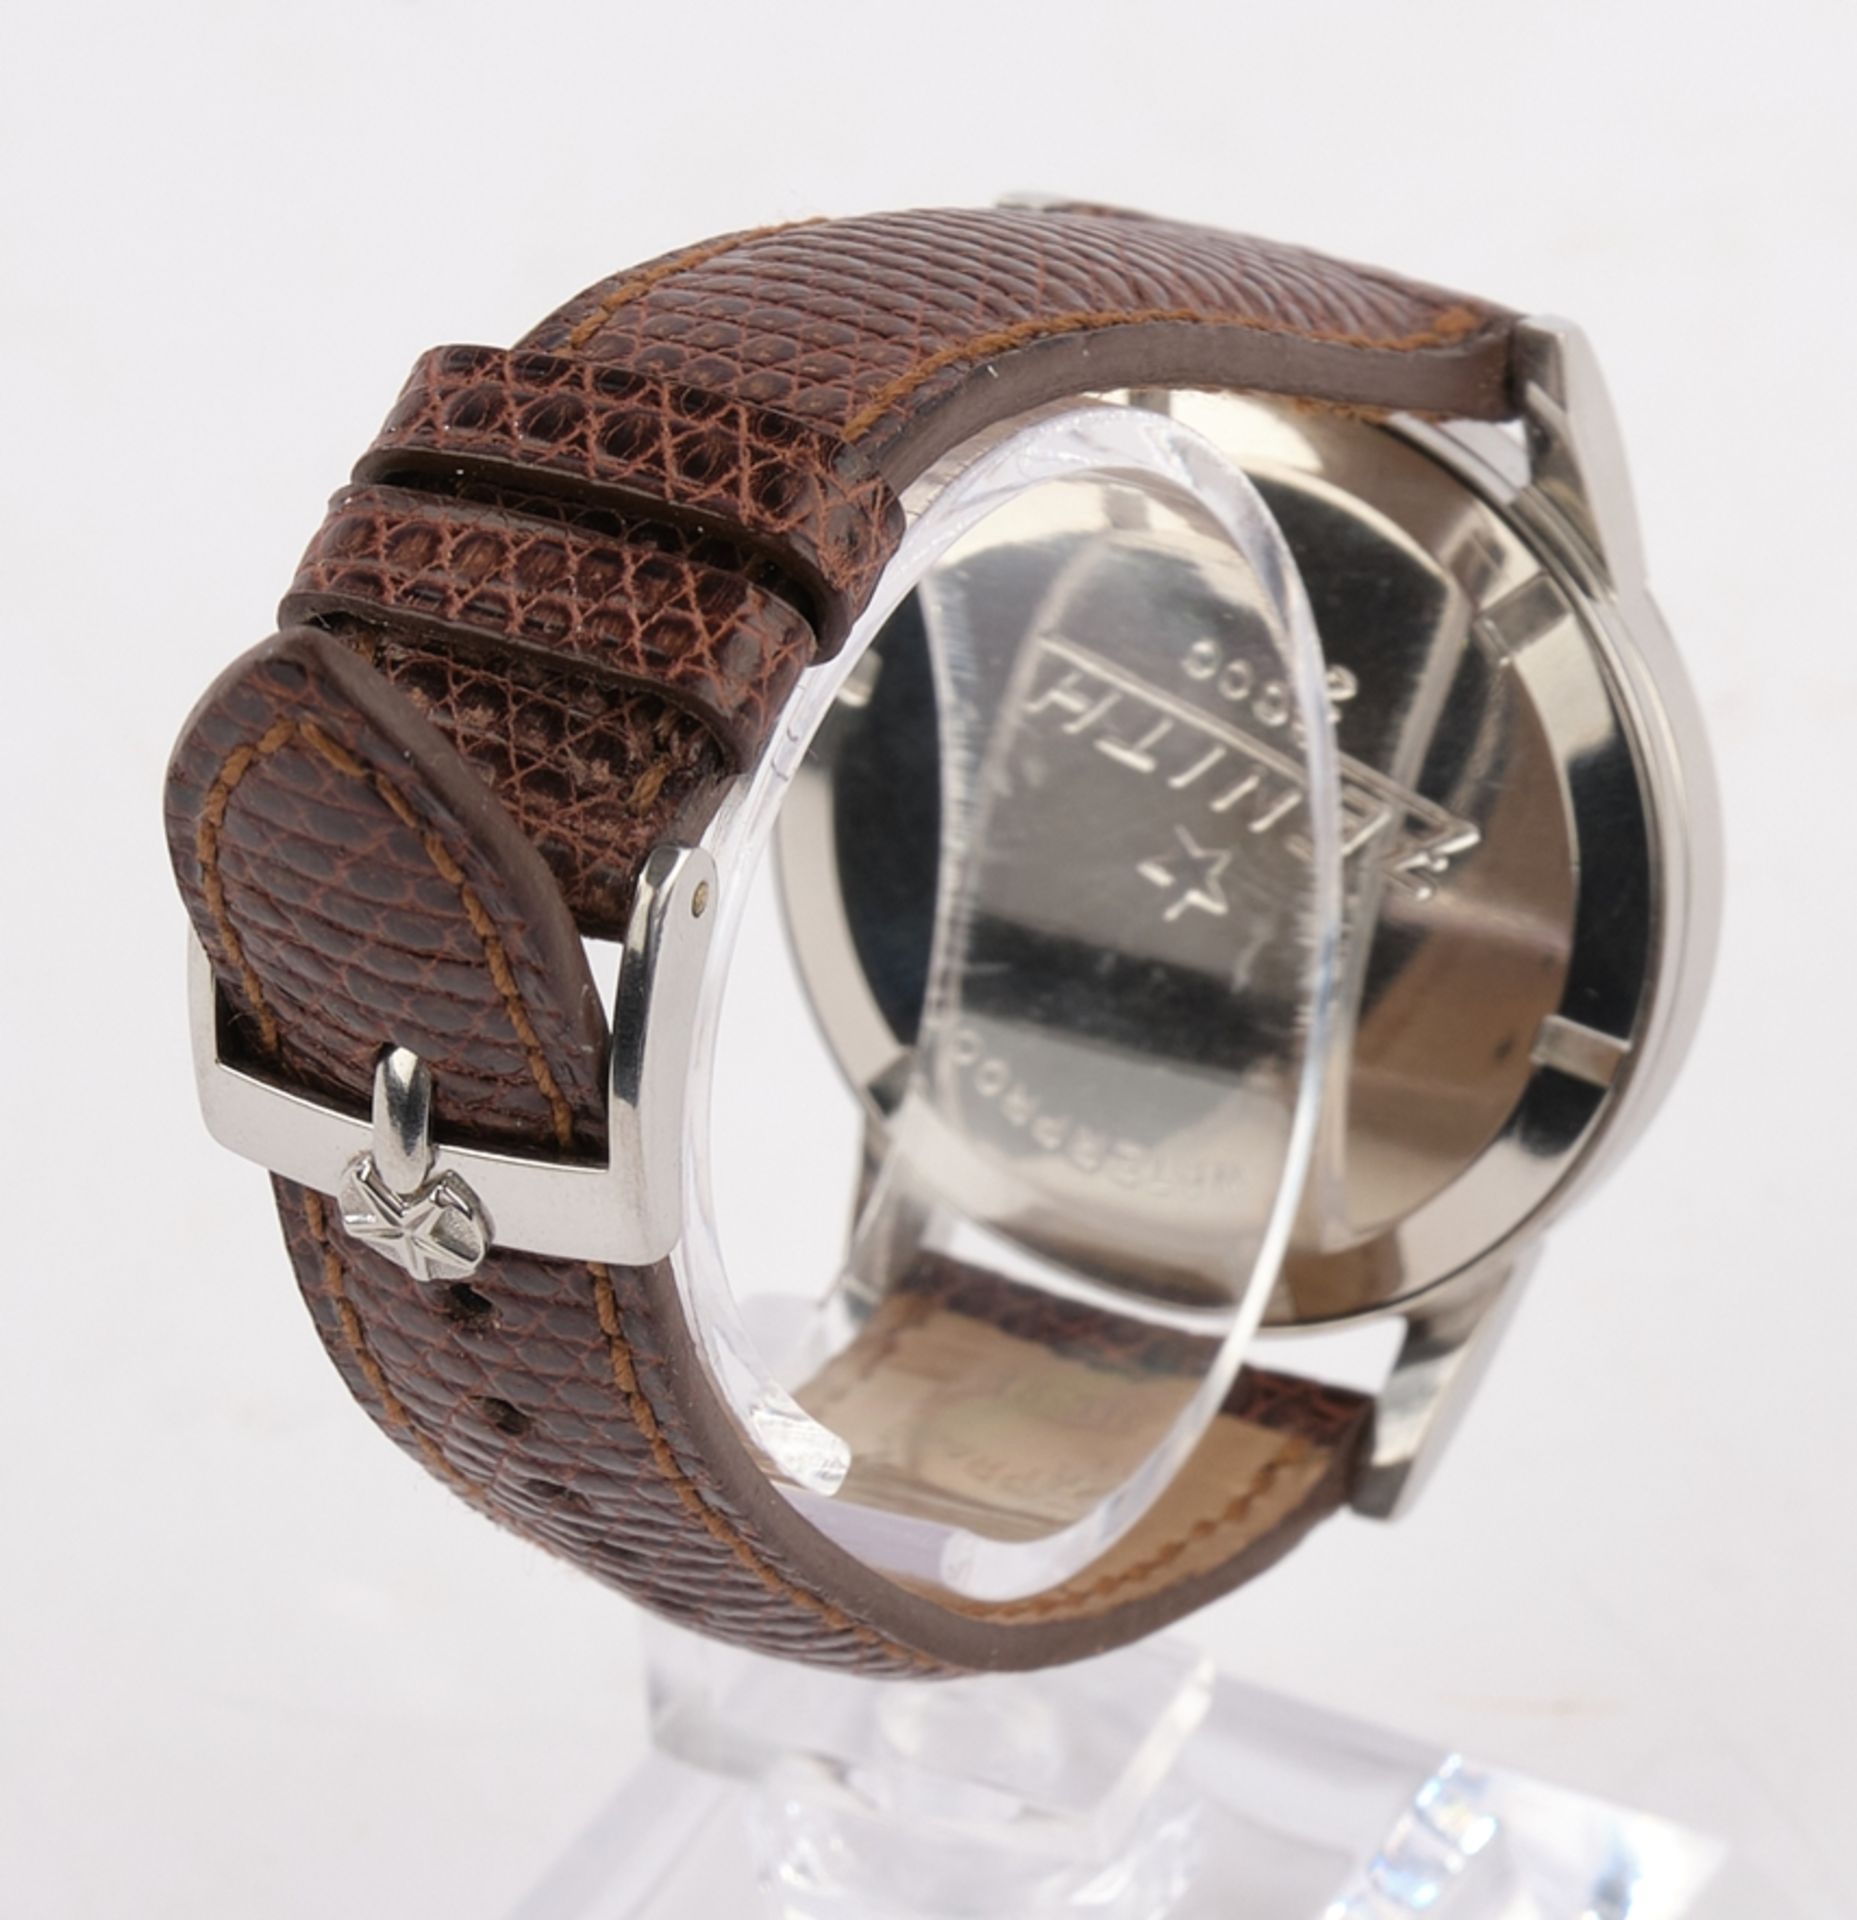 Armbanduhr Zenith 2000 Chronometer, Schweiz, 1960er Jahre, wohl Cal. 135, Handaufzug, neuwertiges b - Image 7 of 7